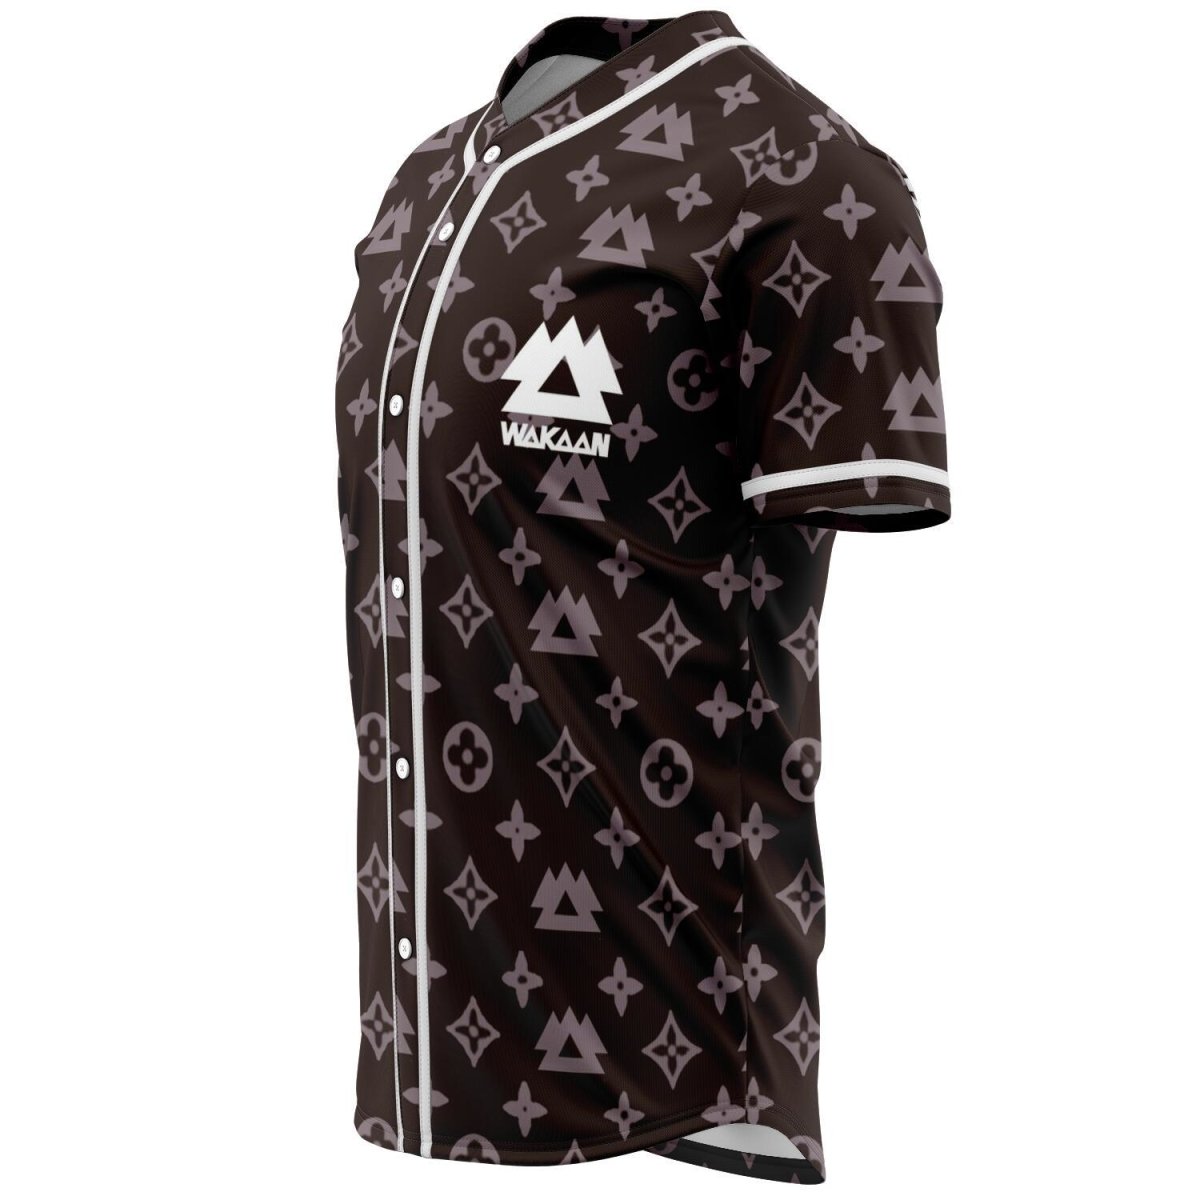 Baseball Jersey Supreme LV Jersey Shirt Jersey For Men Full Print Design